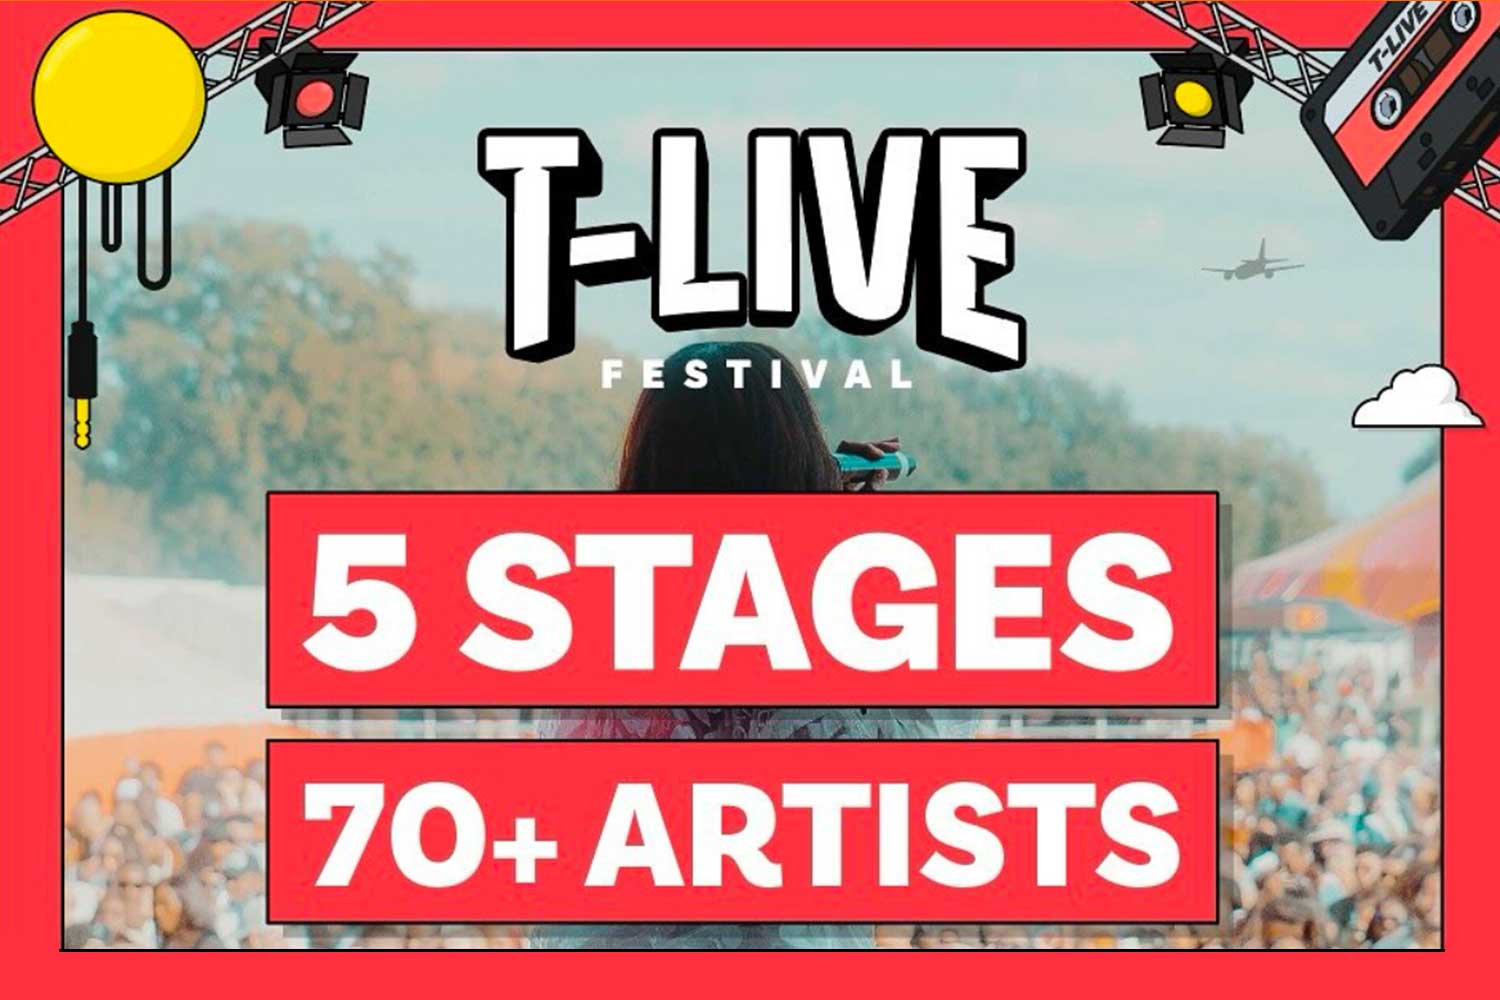 Sat, 4th Aug | Reggae Brunch Stage T-Live fest